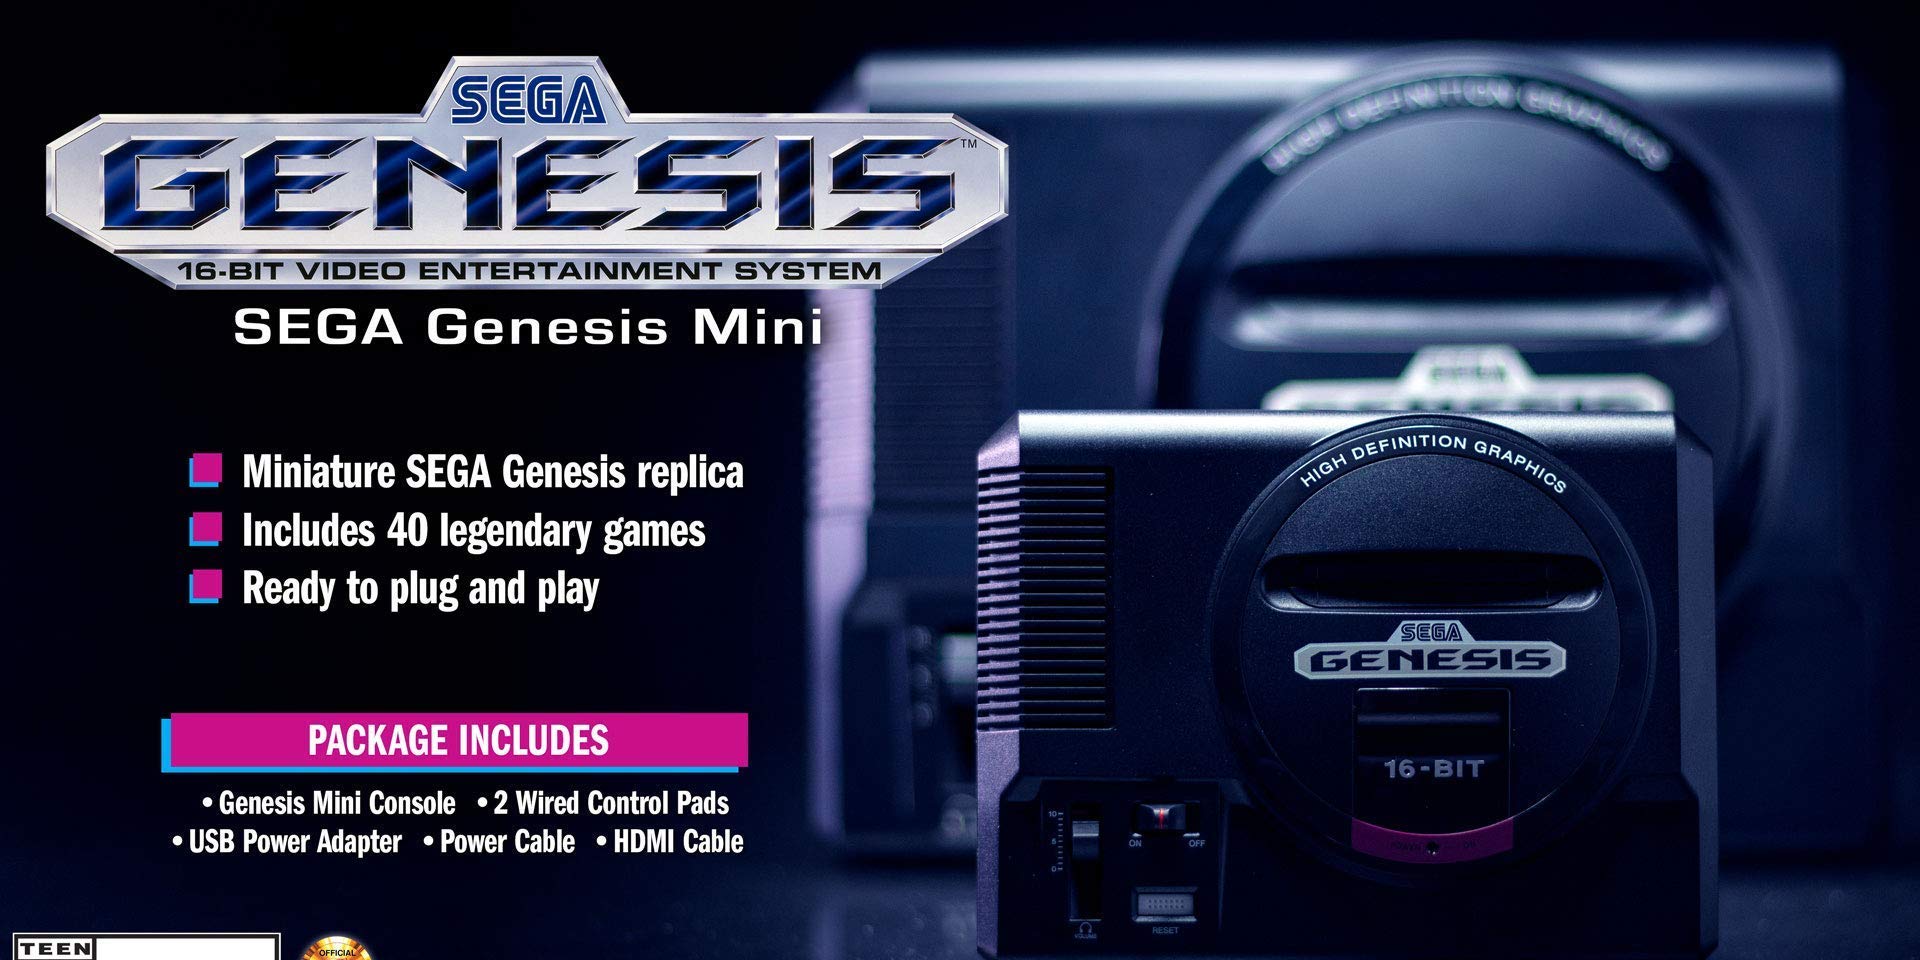  Sega Genesis 2 Console Sonic the Hedgehog 2 Bundle Pack : Video  Games